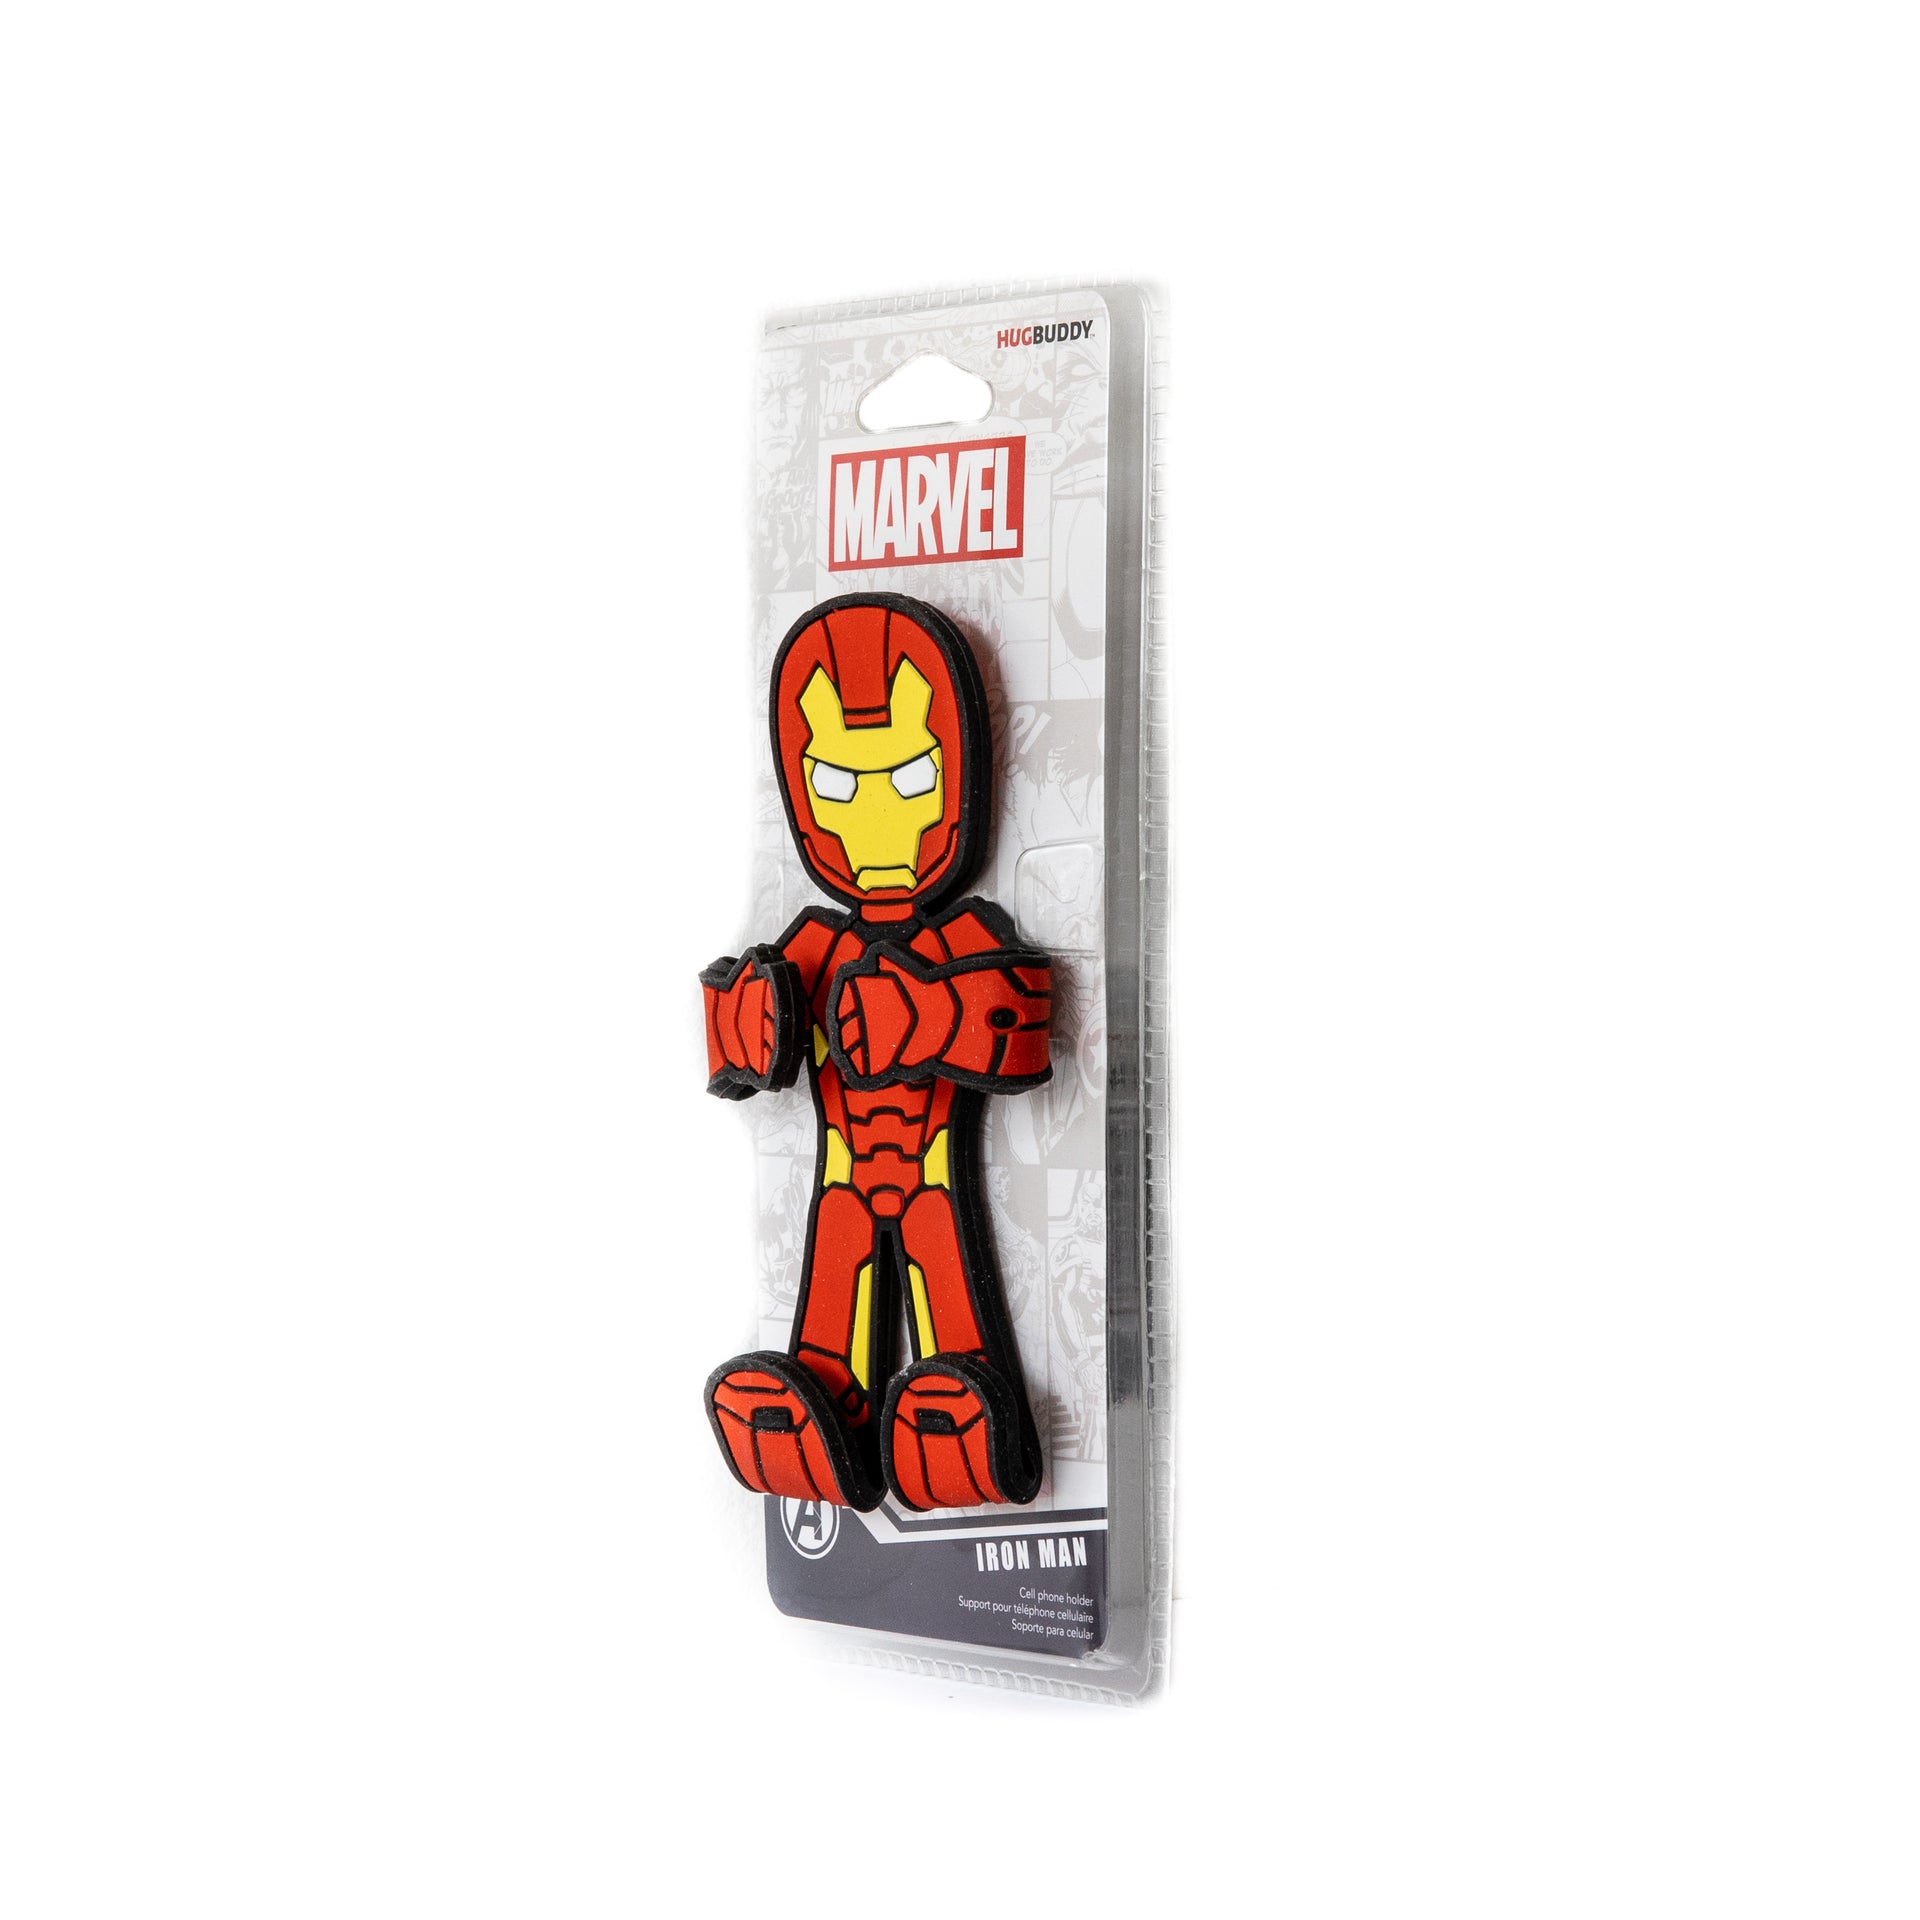 Image of Marvel Comics Iron Man Hug Buddy packaging 45 degree side view